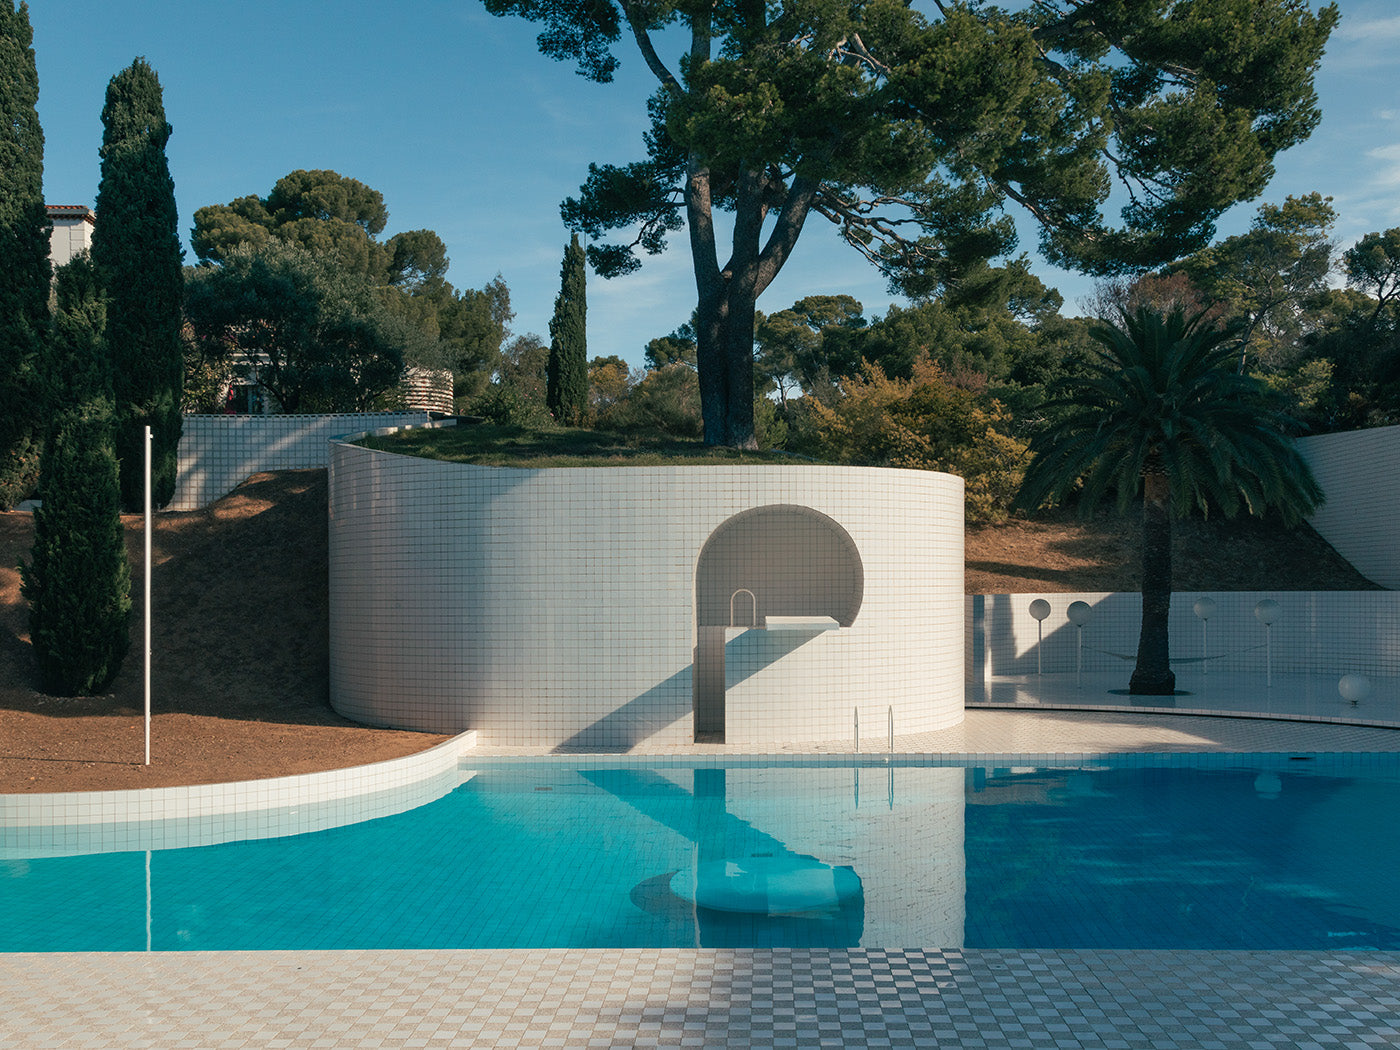 The full pool by Romain Laprade